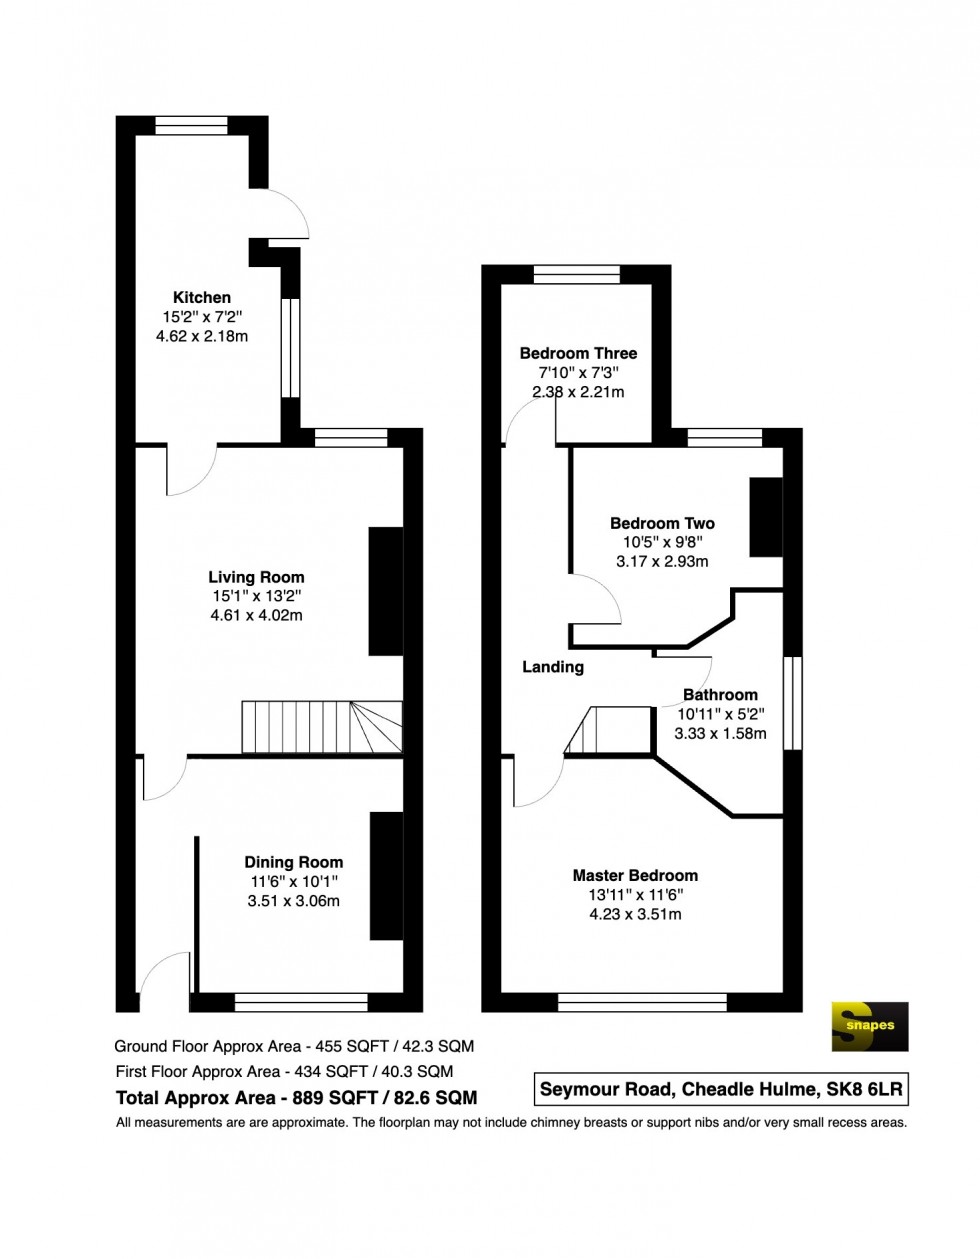 Floorplan for Seymour Road, Cheadle Hulme, SK8 6LR - FREEHOLD